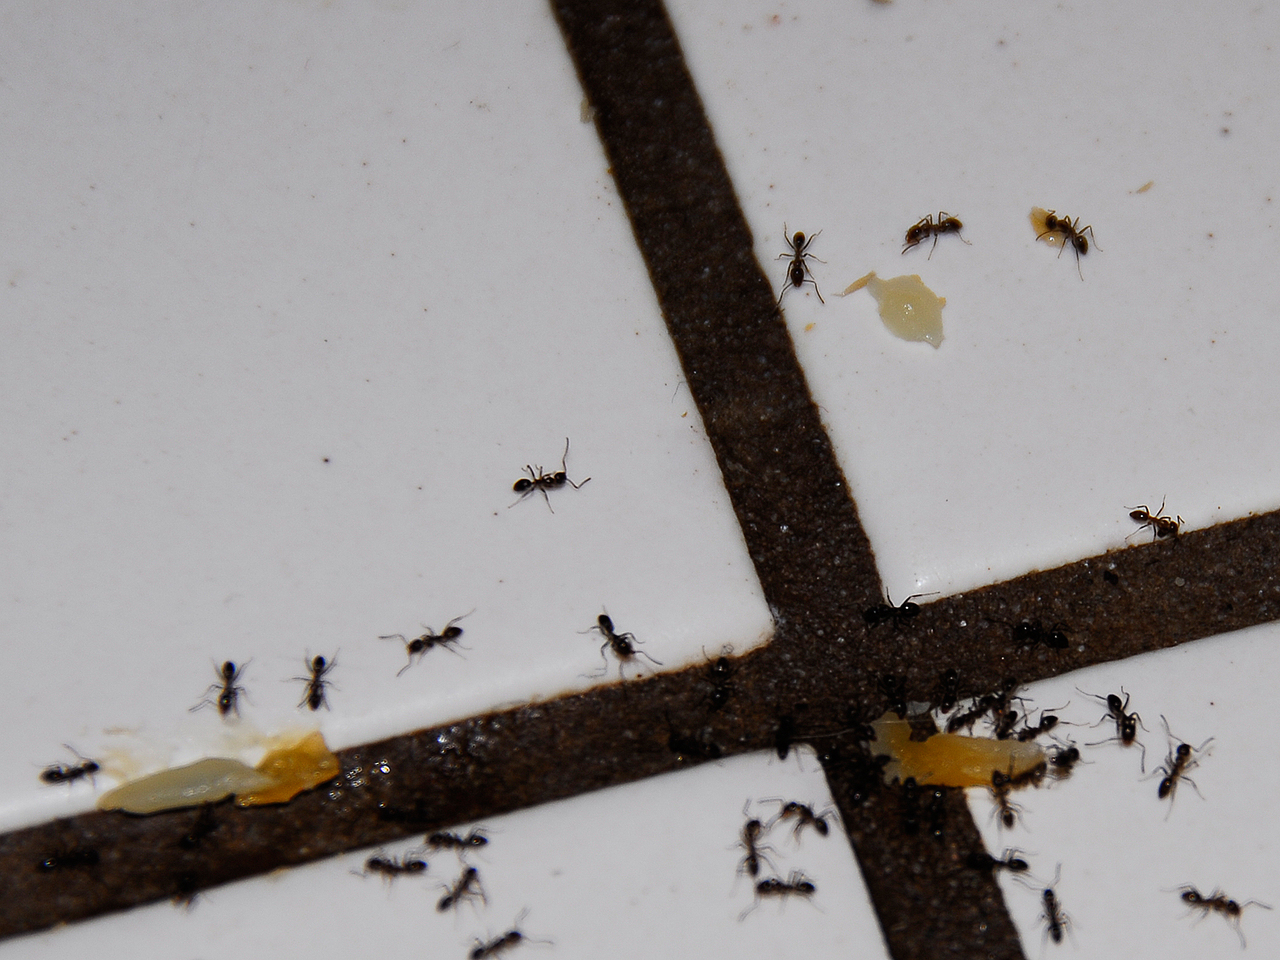 Ants crawling on floor